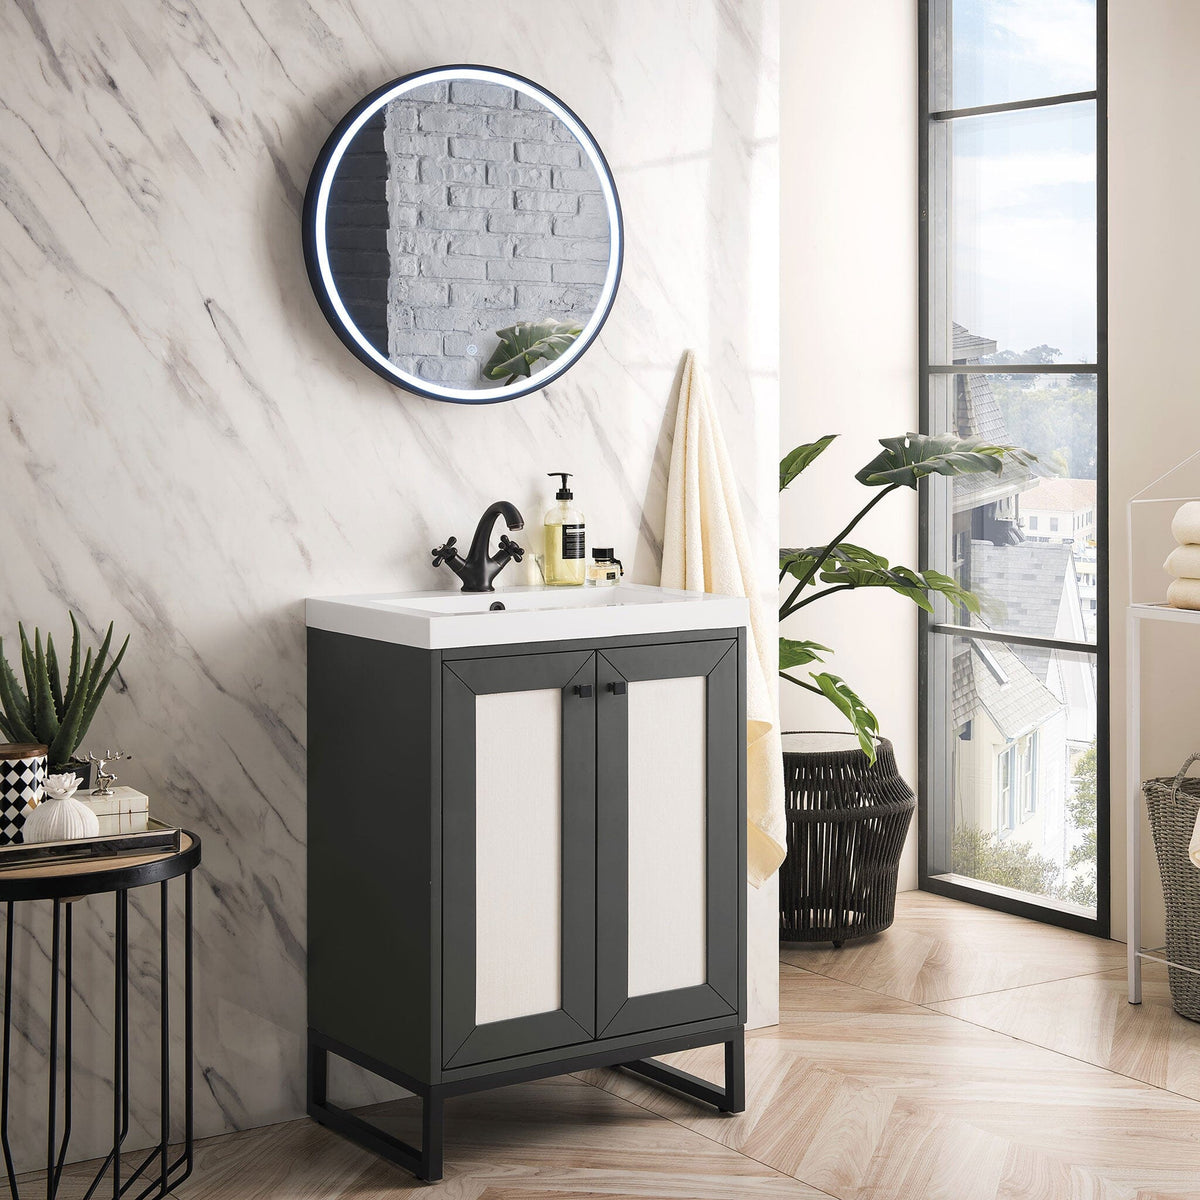 24" Chianti Single Bathroom Vanity, Mineral Gray, Matte Black